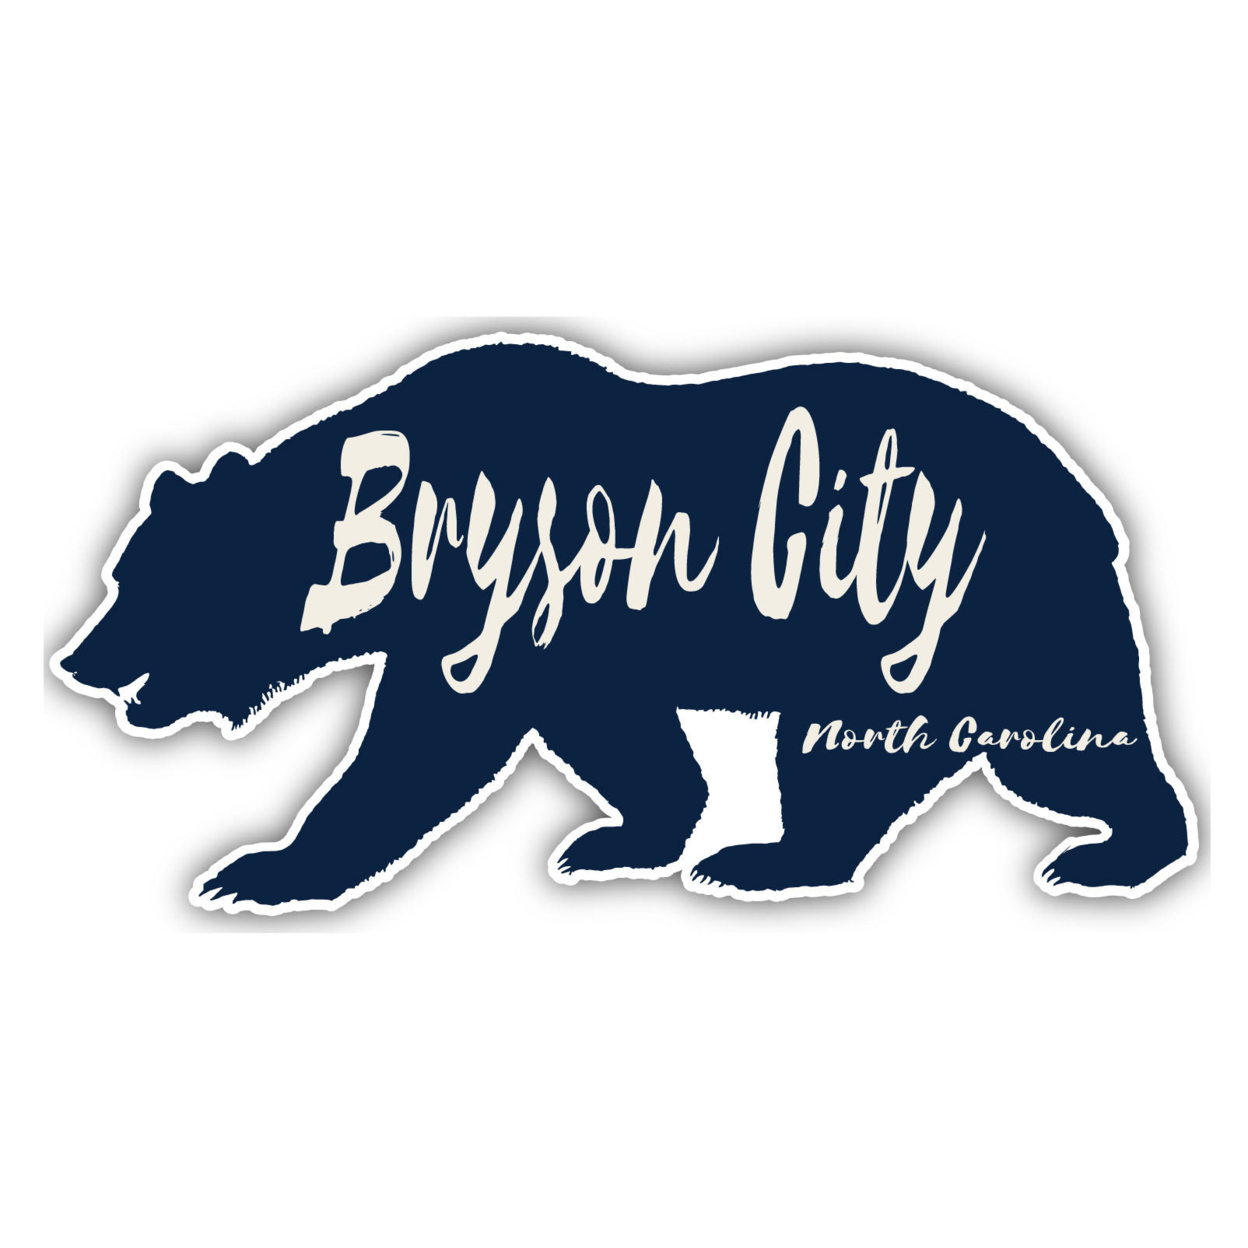 Bryson City North Carolina Souvenir Decorative Stickers (Choose Theme And Size) - 4-Pack, 8-Inch, Bear